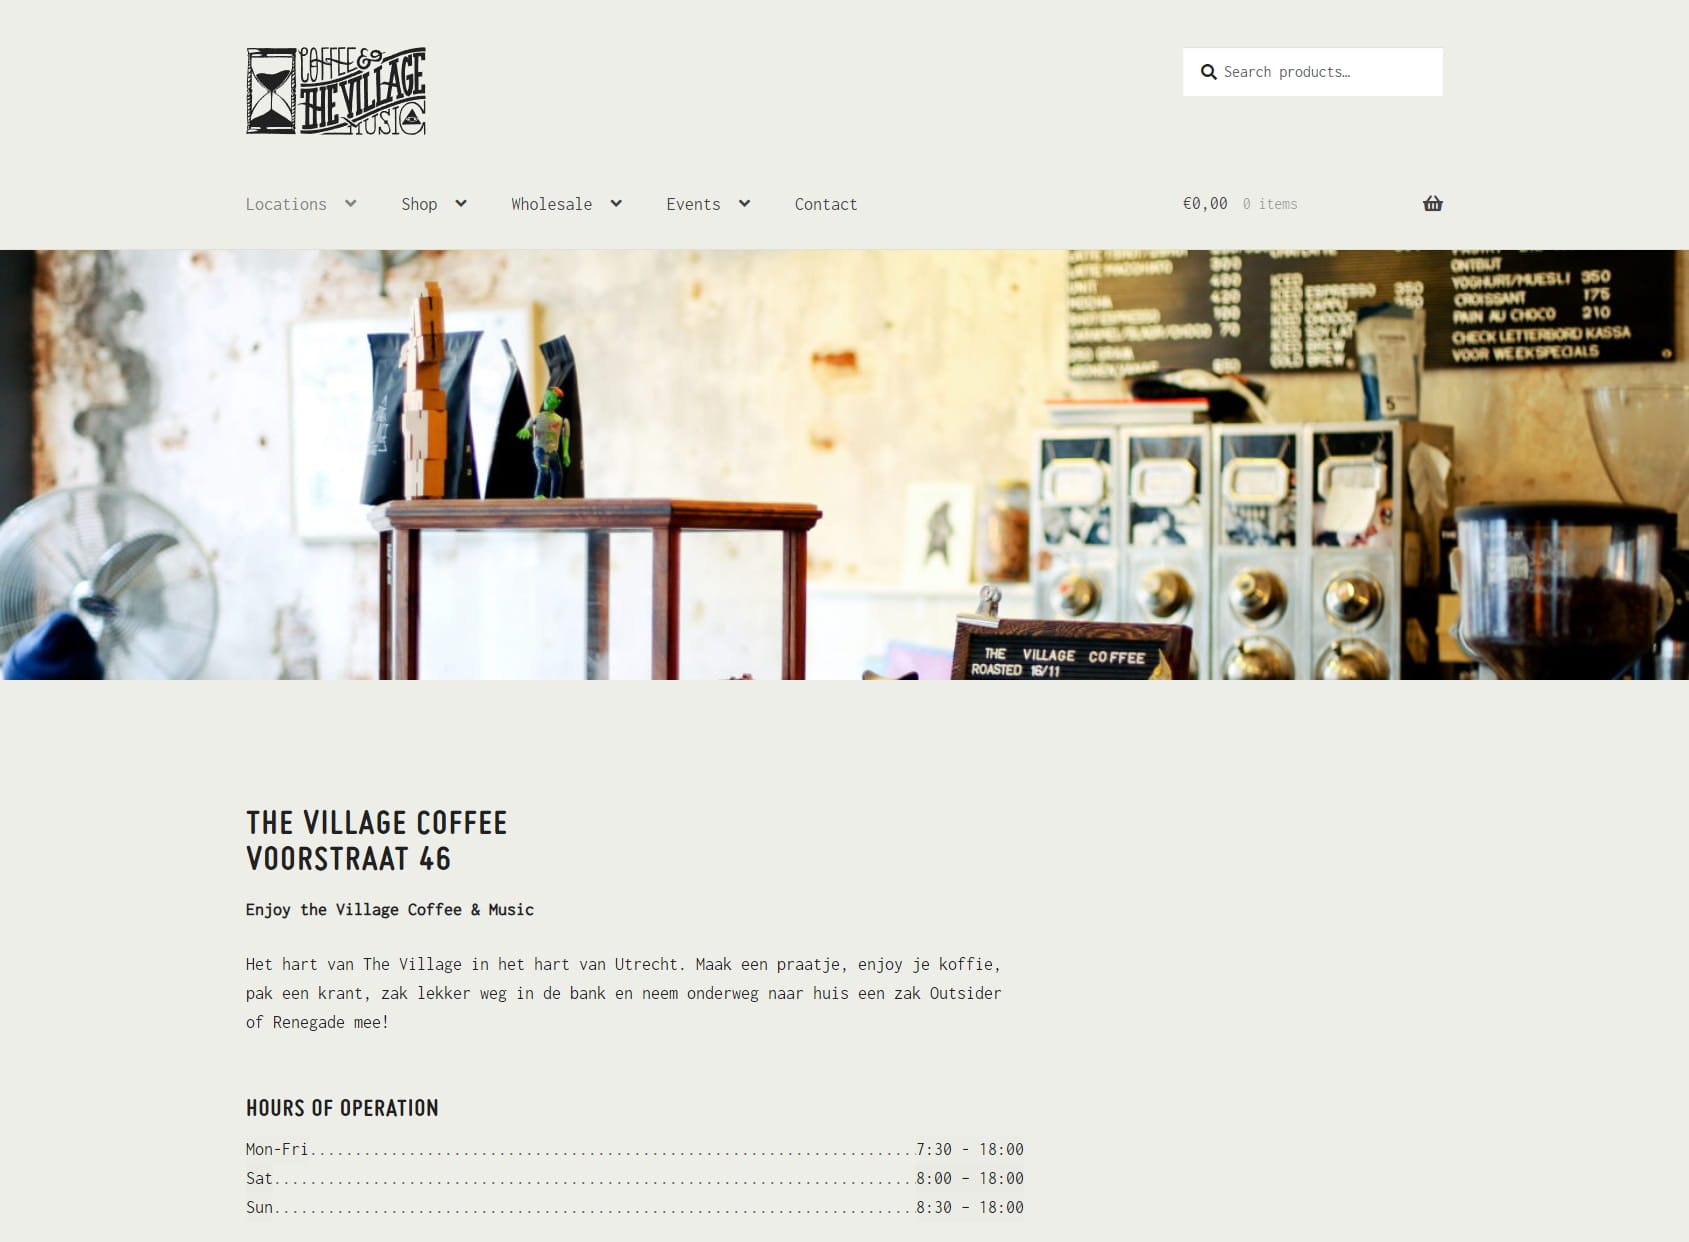 The Village Coffee & Music